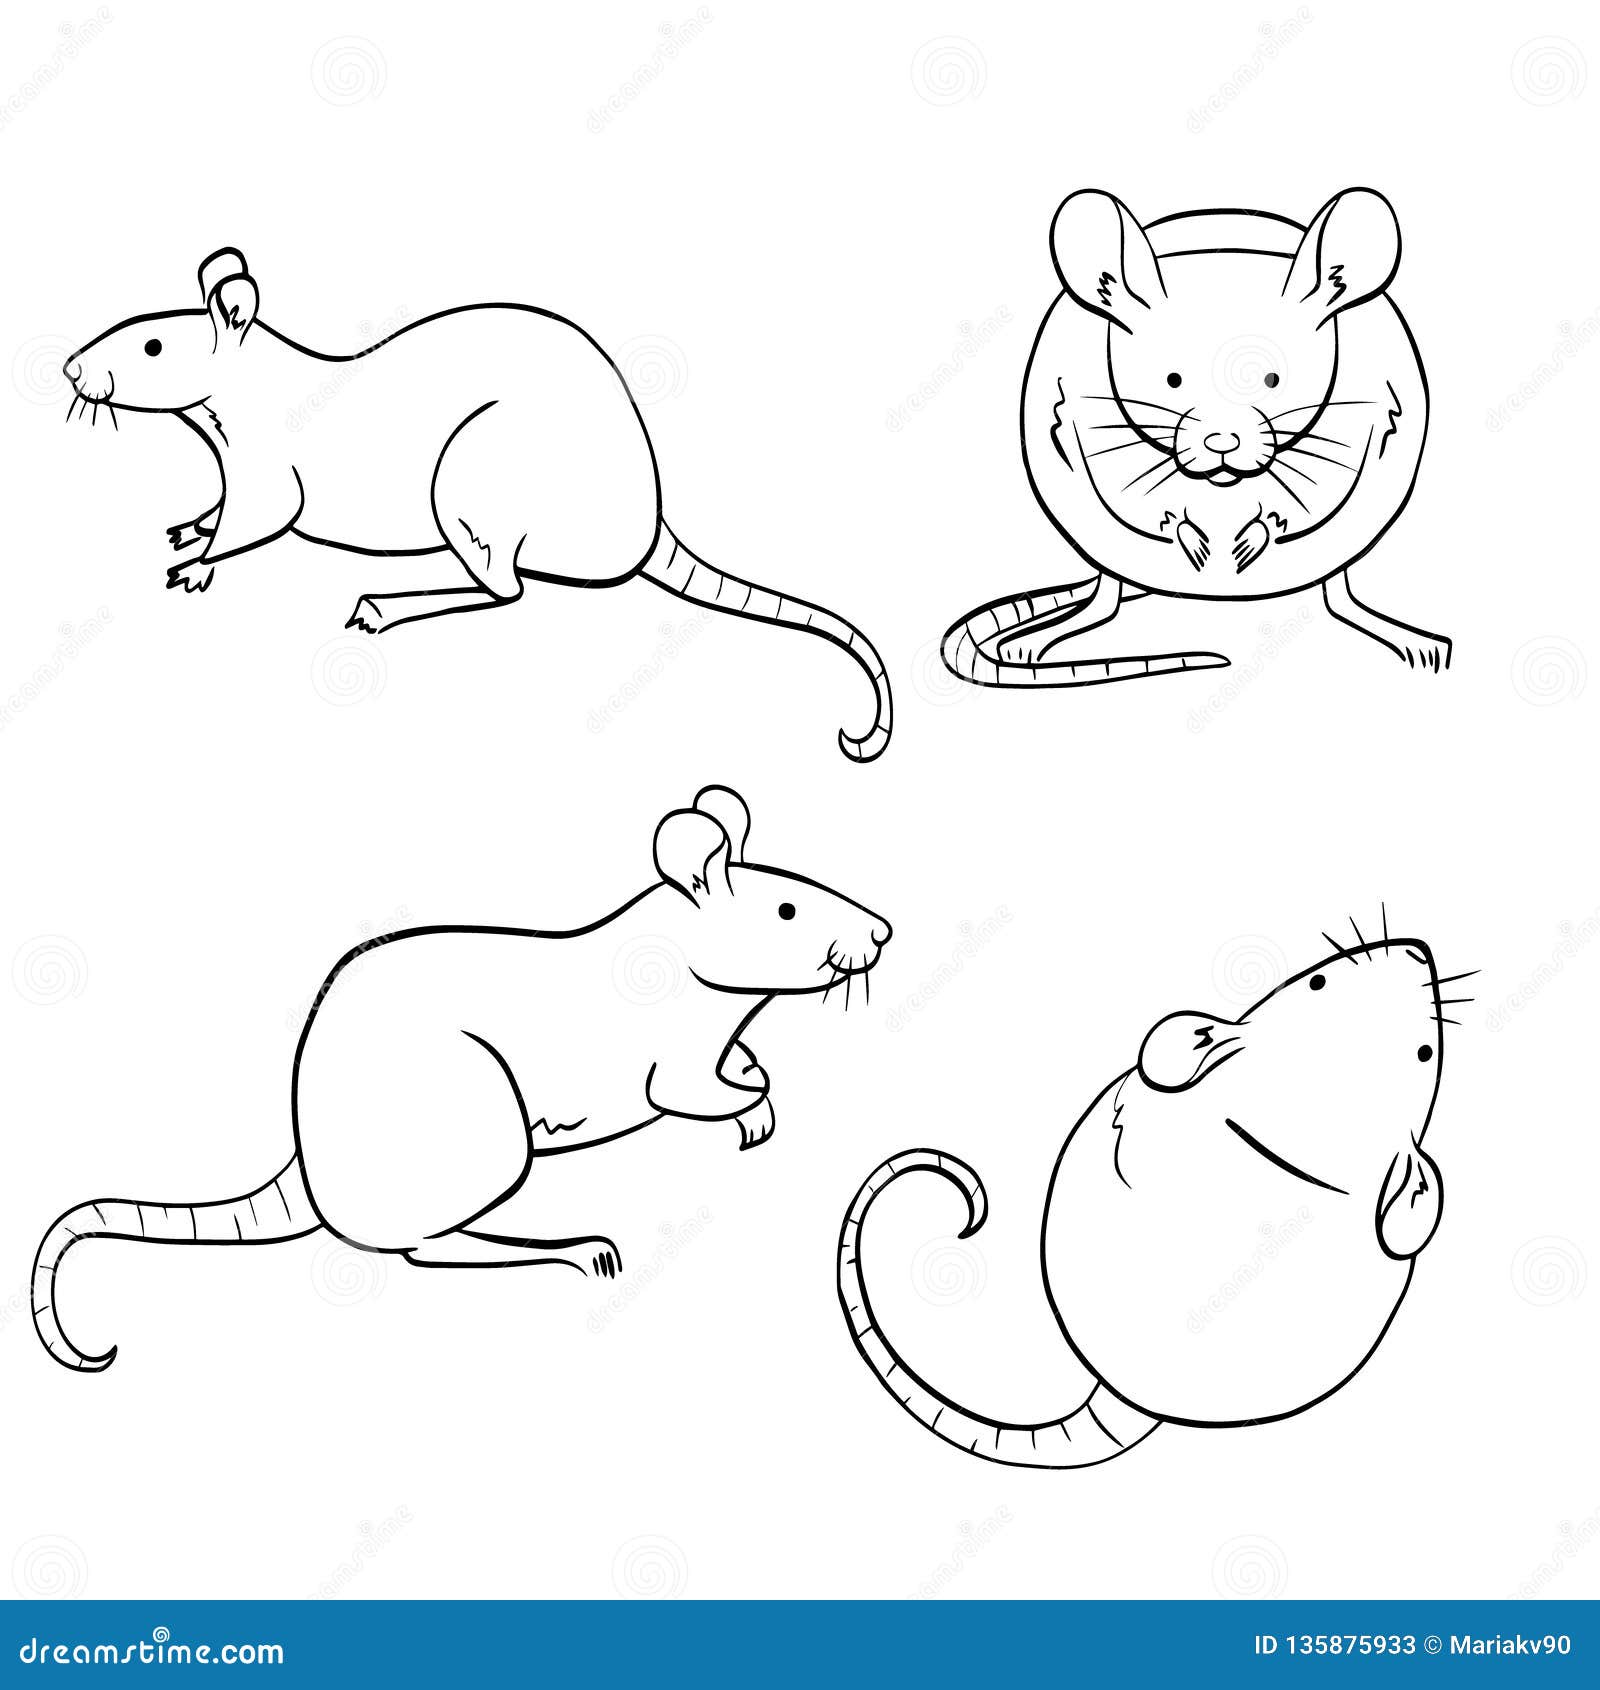 Схематичный рисунок крысы